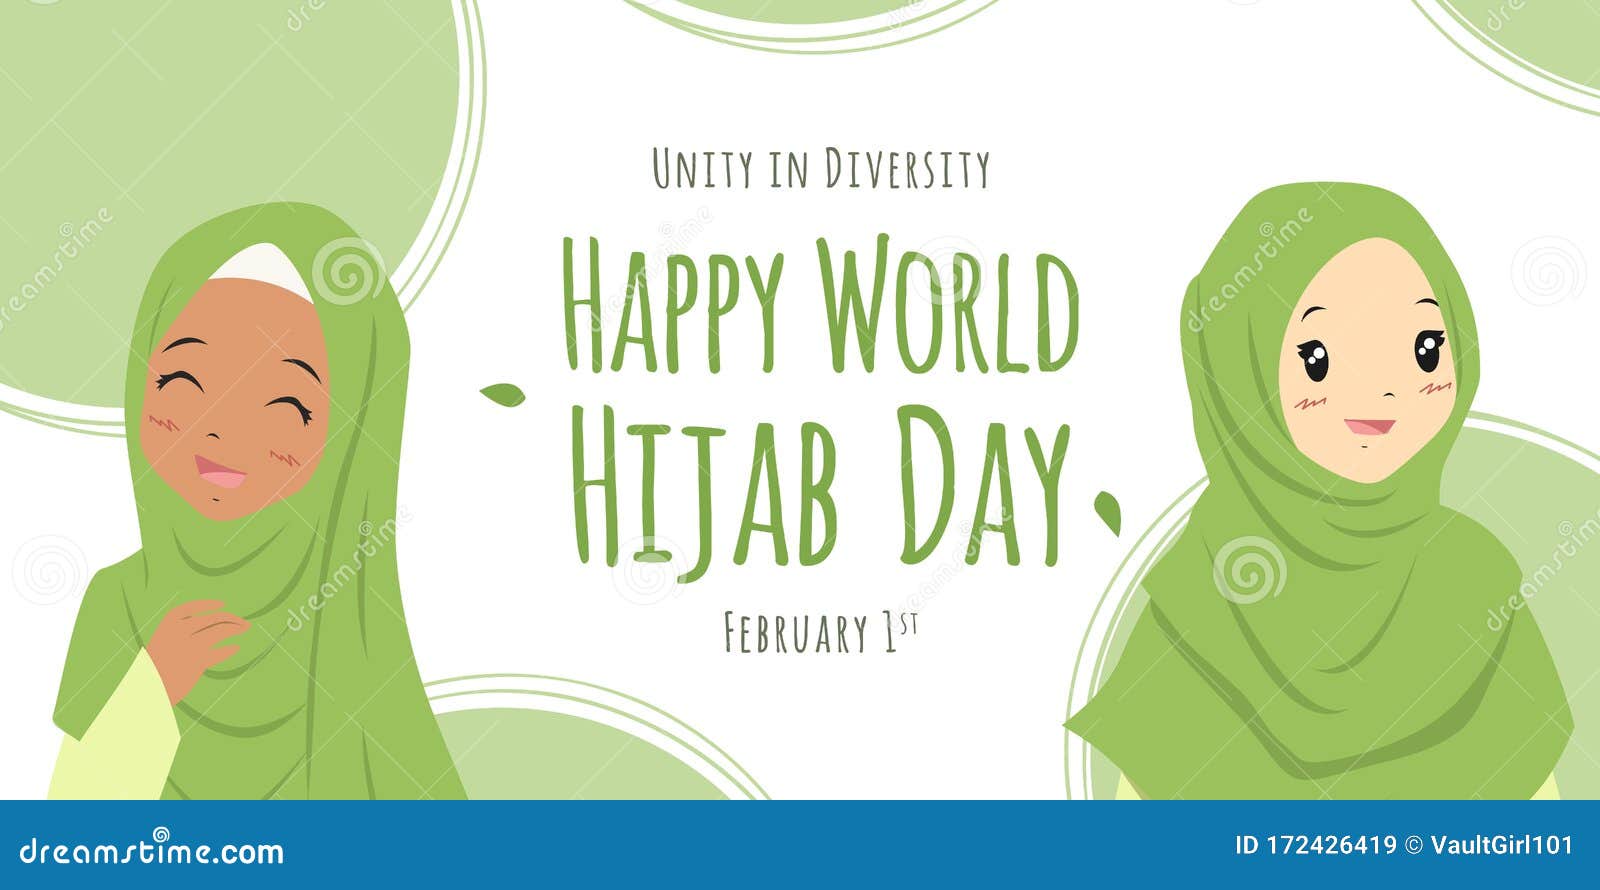 Happy World Hijab Day Banner Design Stock Vector Illustration of